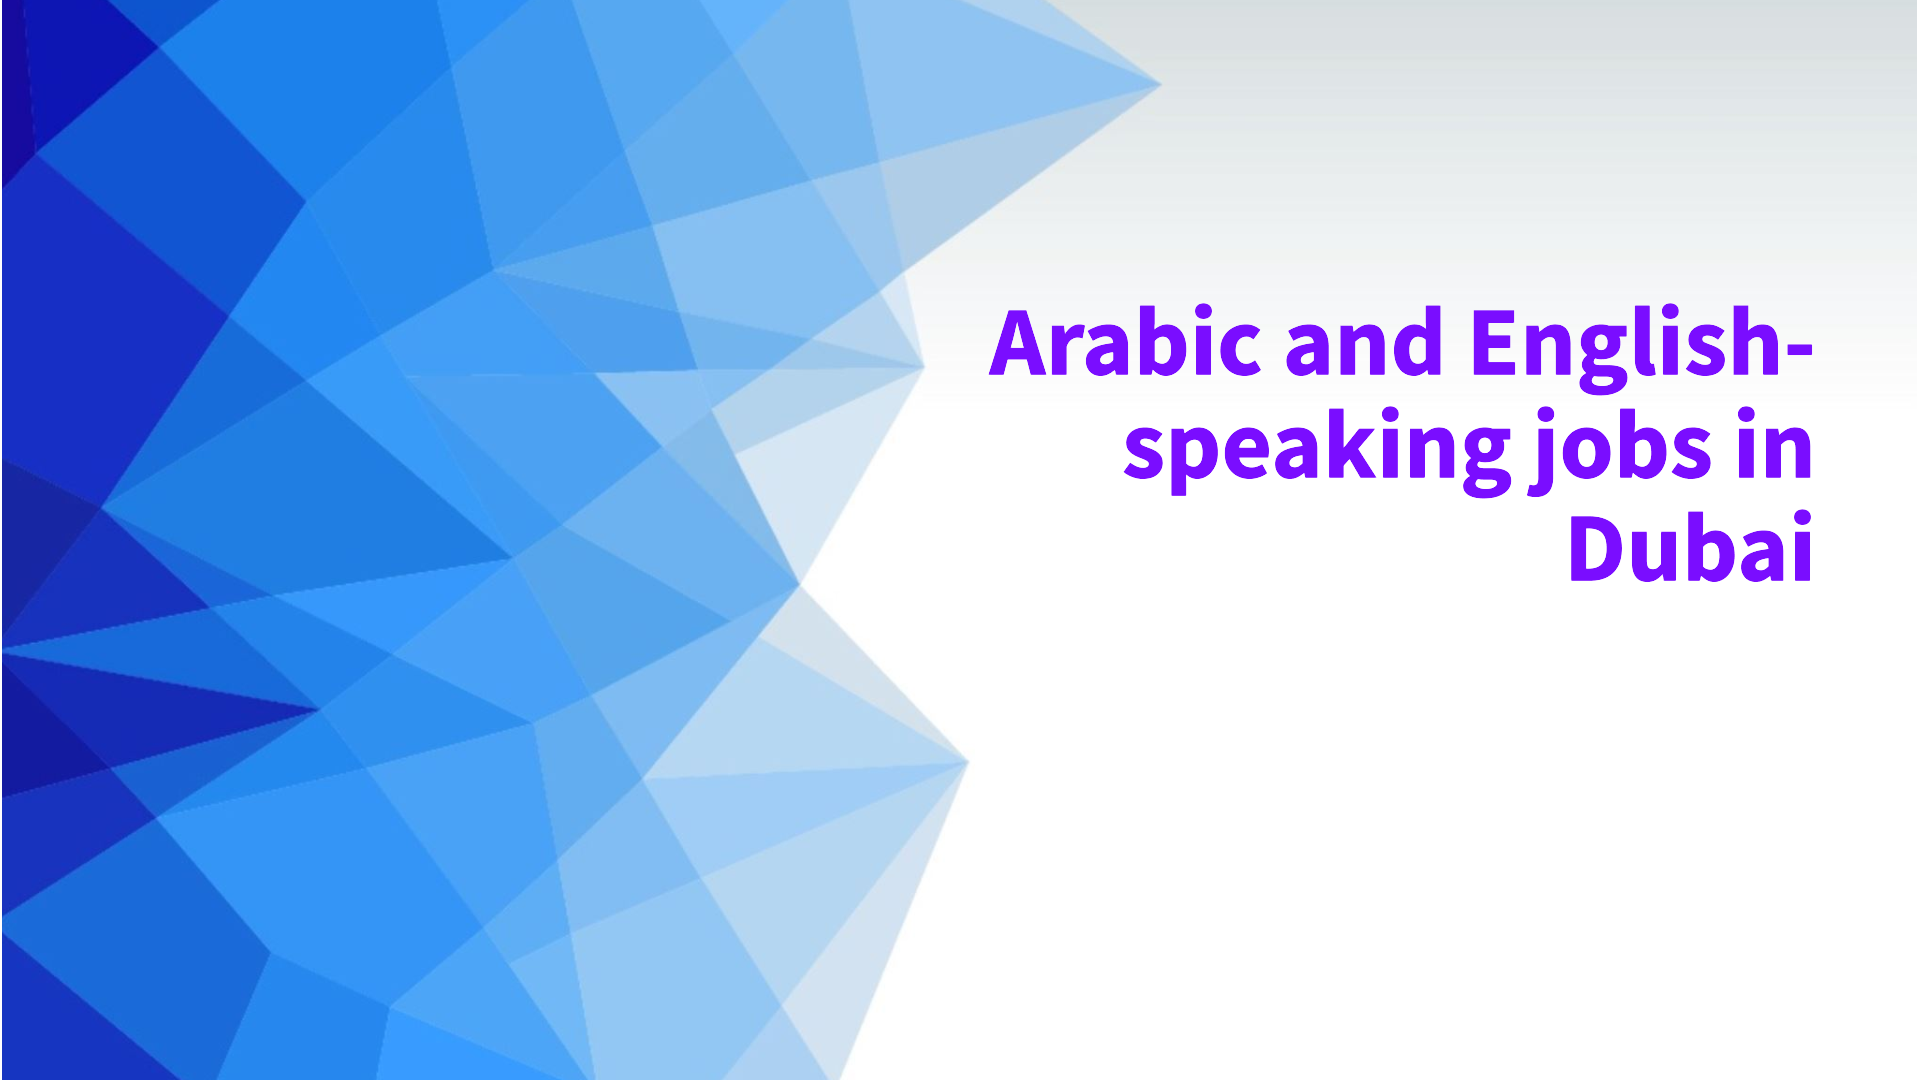 Arabic and English-speaking jobs in Dubai